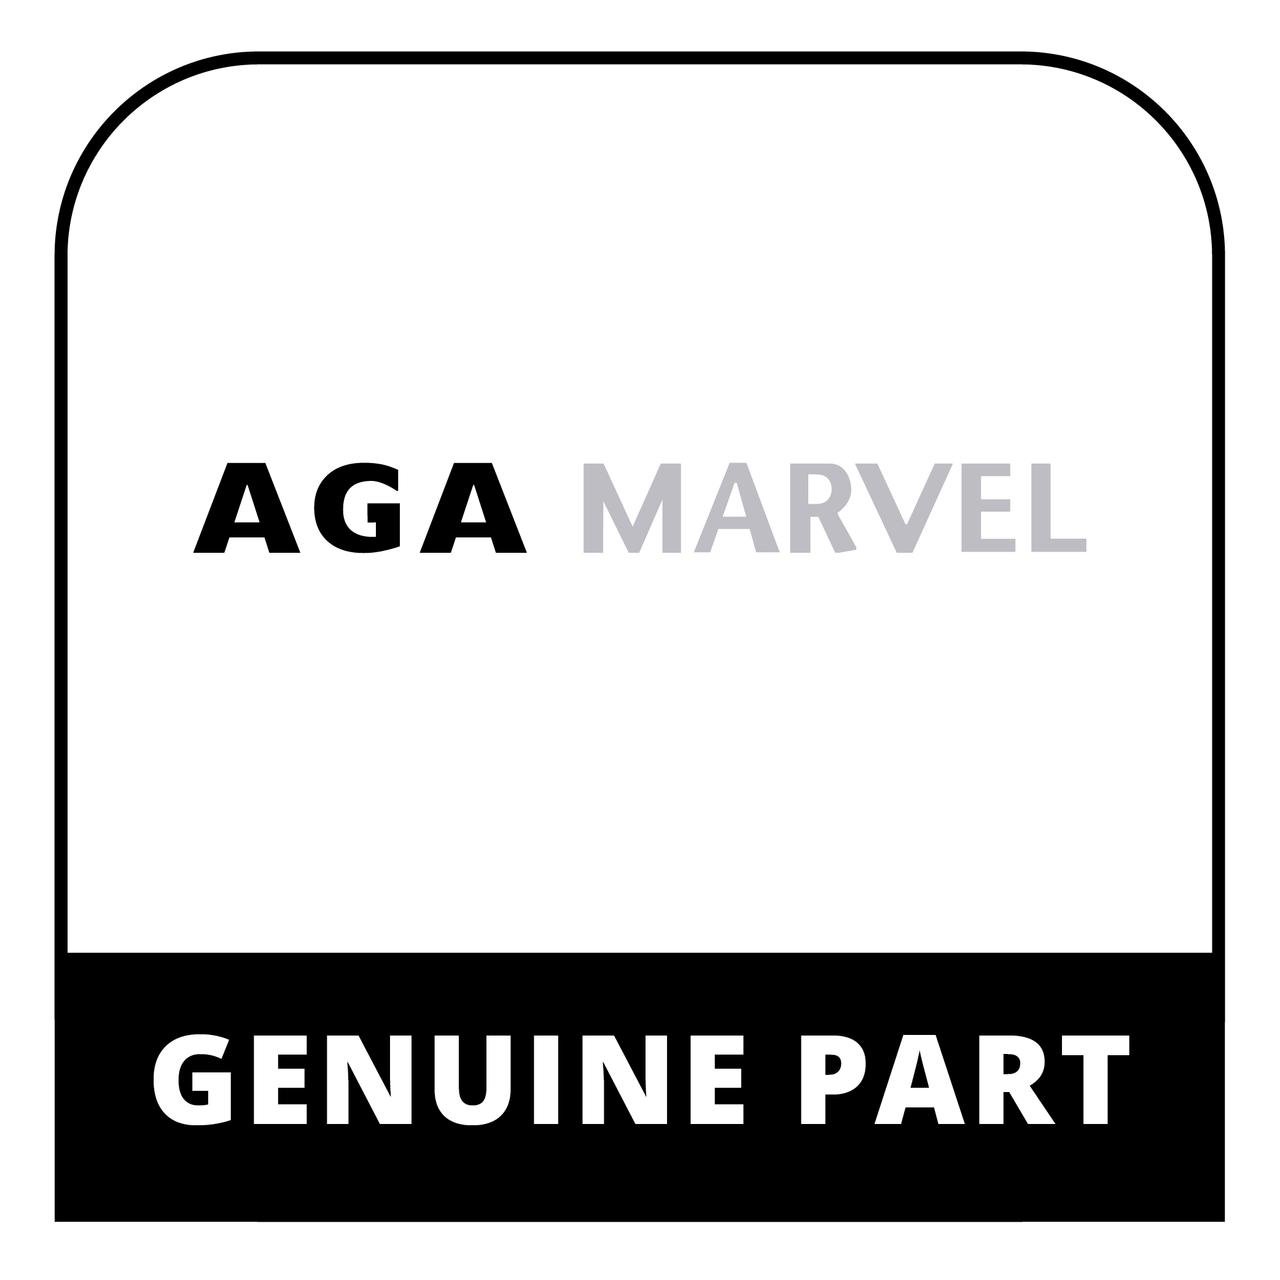 AGA Marvel A4882 - Adaptor-Gas Conns.6-4 (Europe) - Genuine AGA Marvel Part